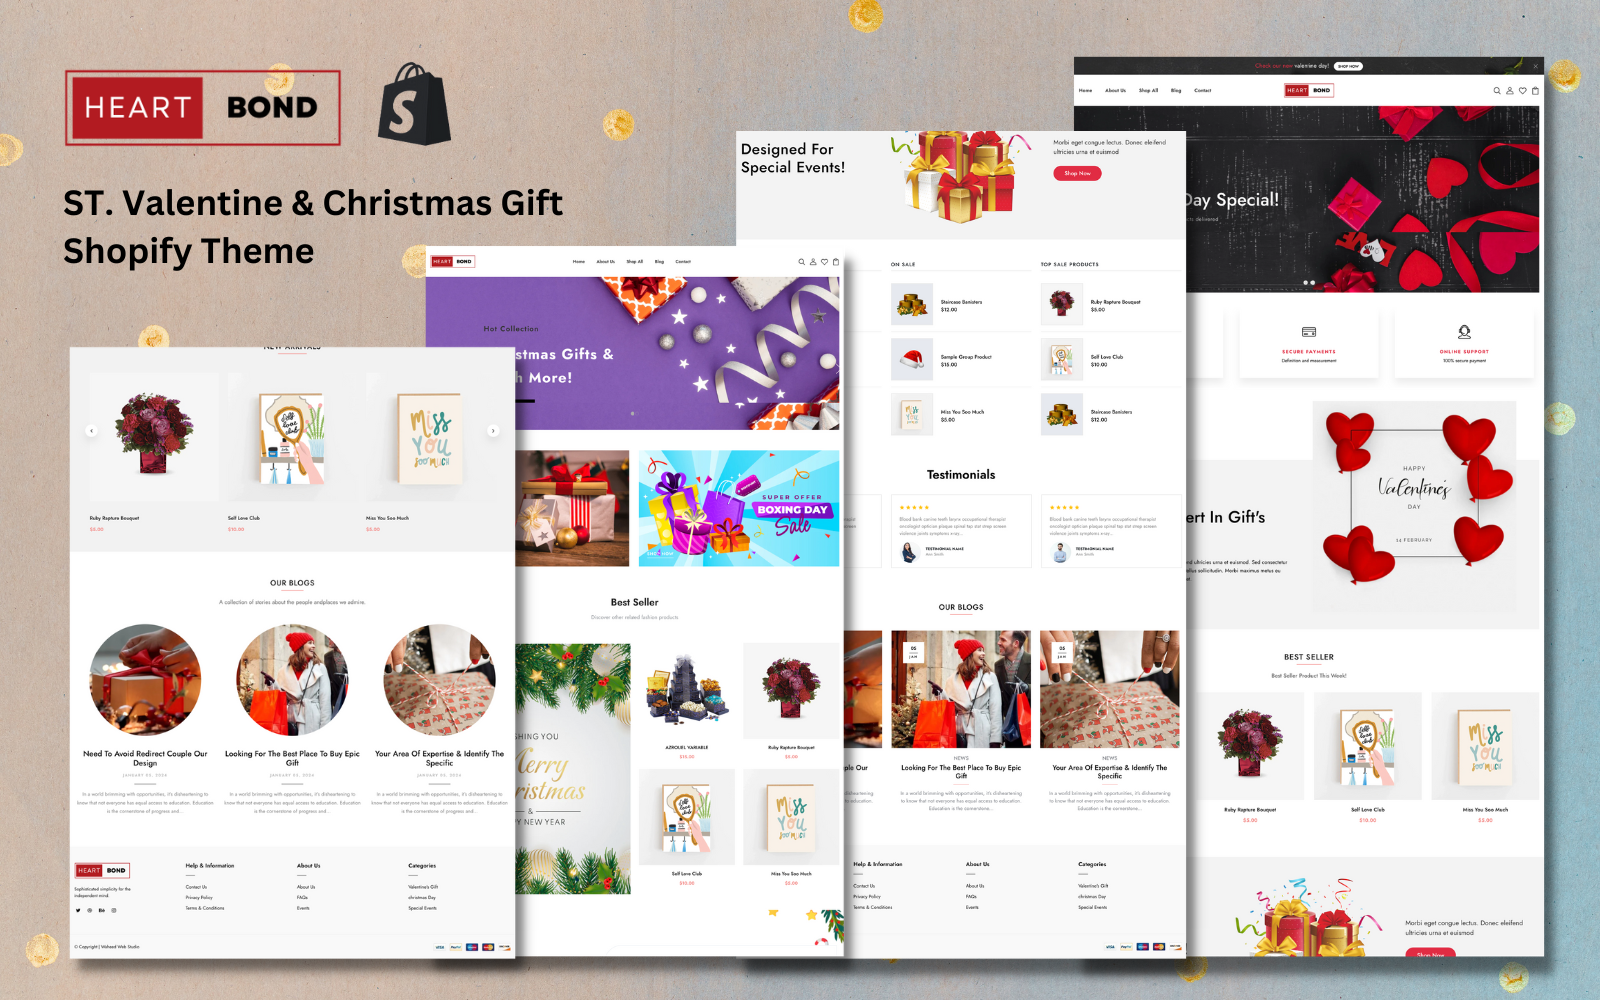 HeartBond - St. Valentine & Christmas Gift Shopify Theme